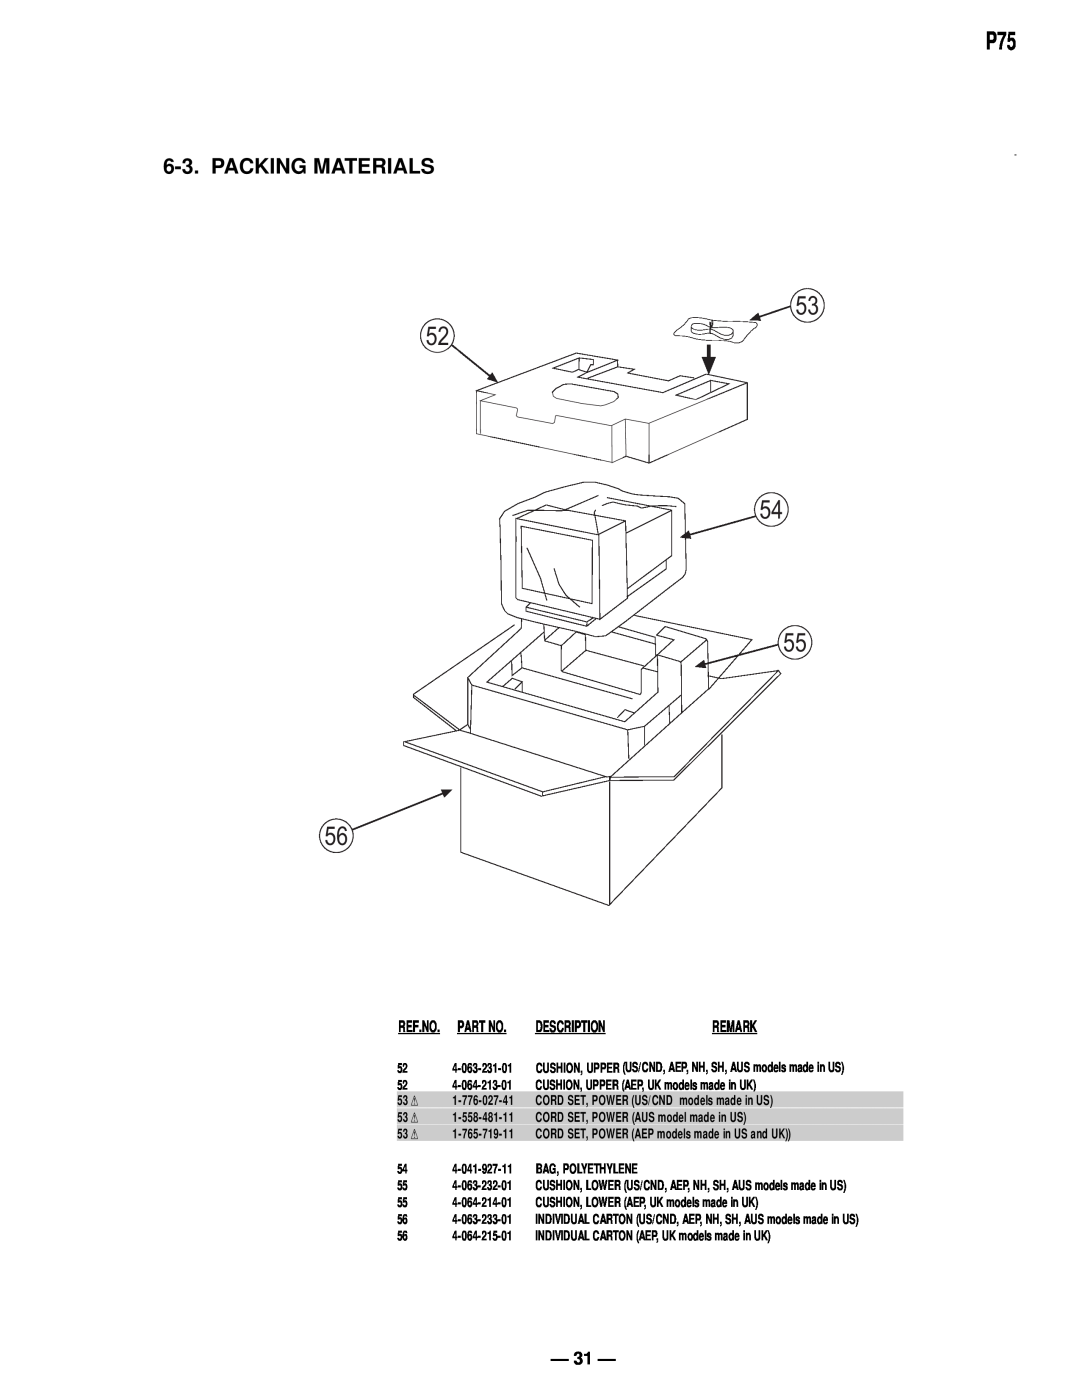 Compaq D-1H specifications Packing Materials, Description, Remark, Ref.No 